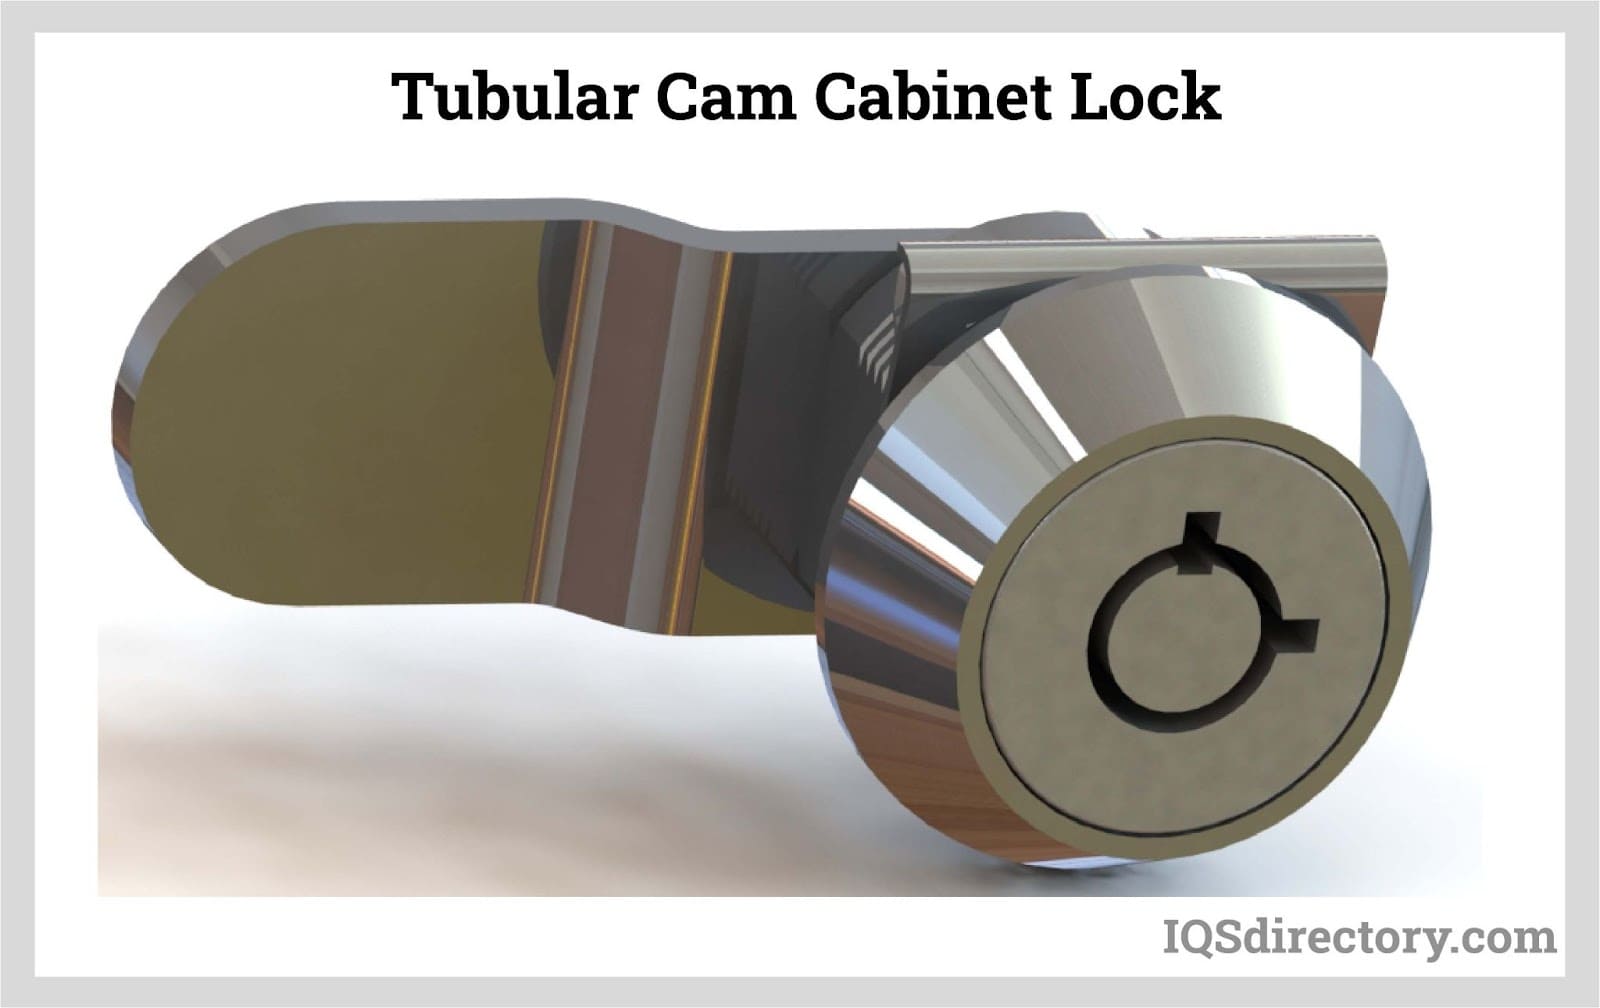 Tubular Cam Cabinet Lock